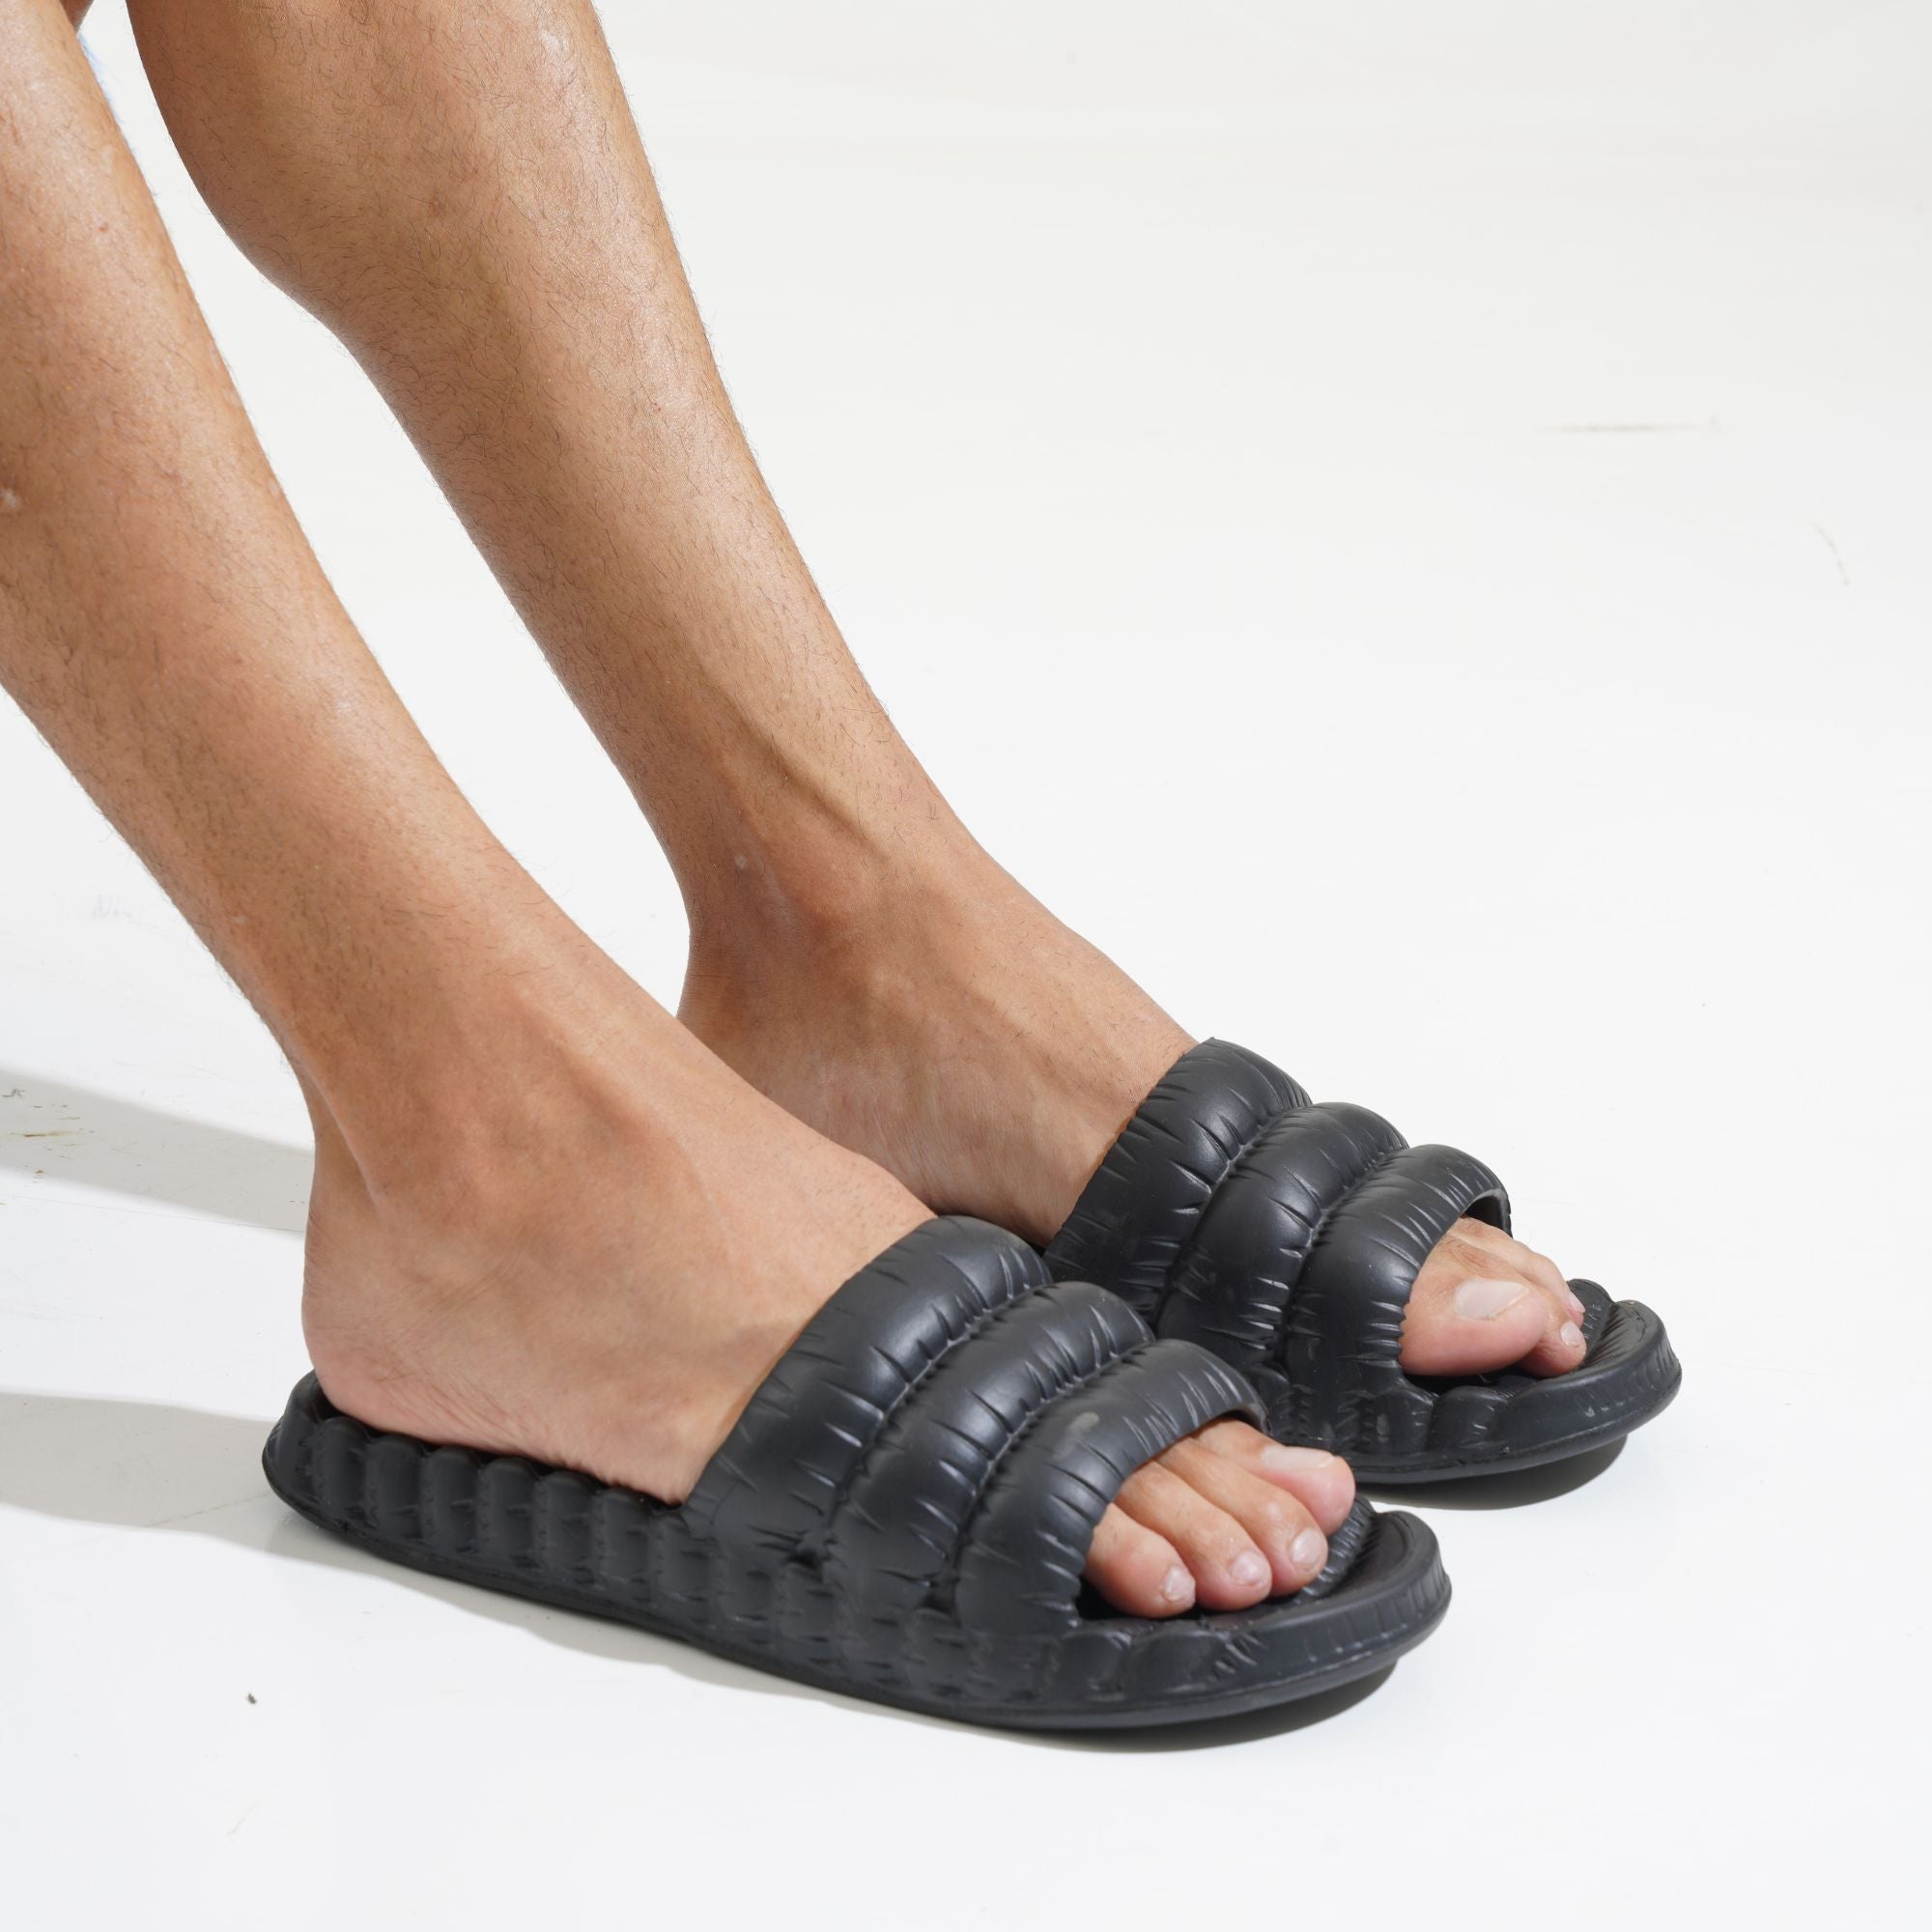 Buy RITA Men's Denim Flip Flops - Black at Amazon.in